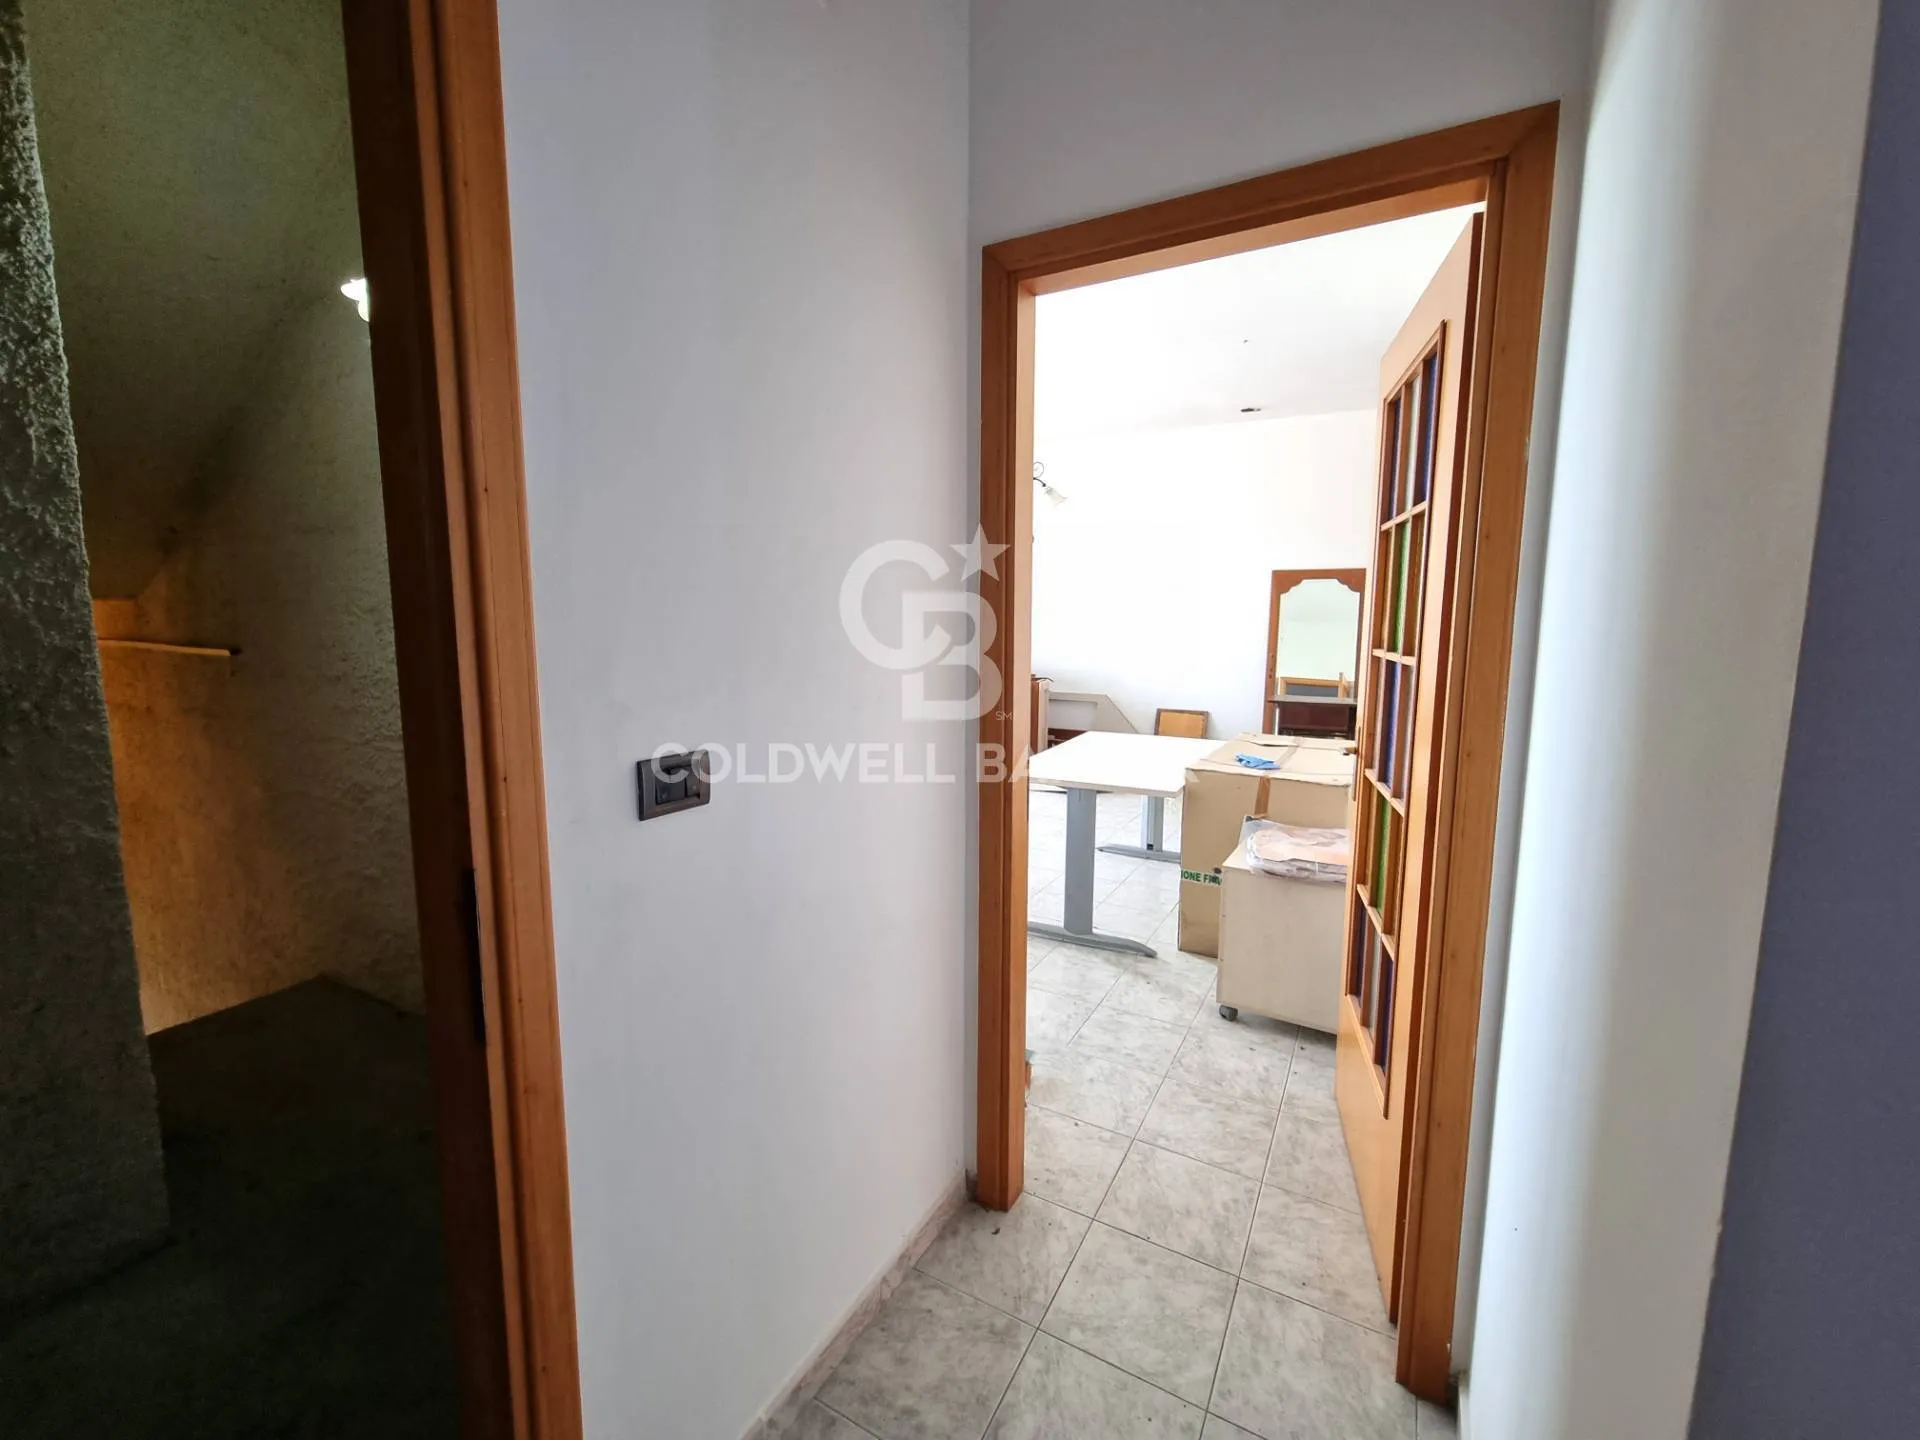 Immagine per Appartamento in vendita a Canicattini Bagni via canale